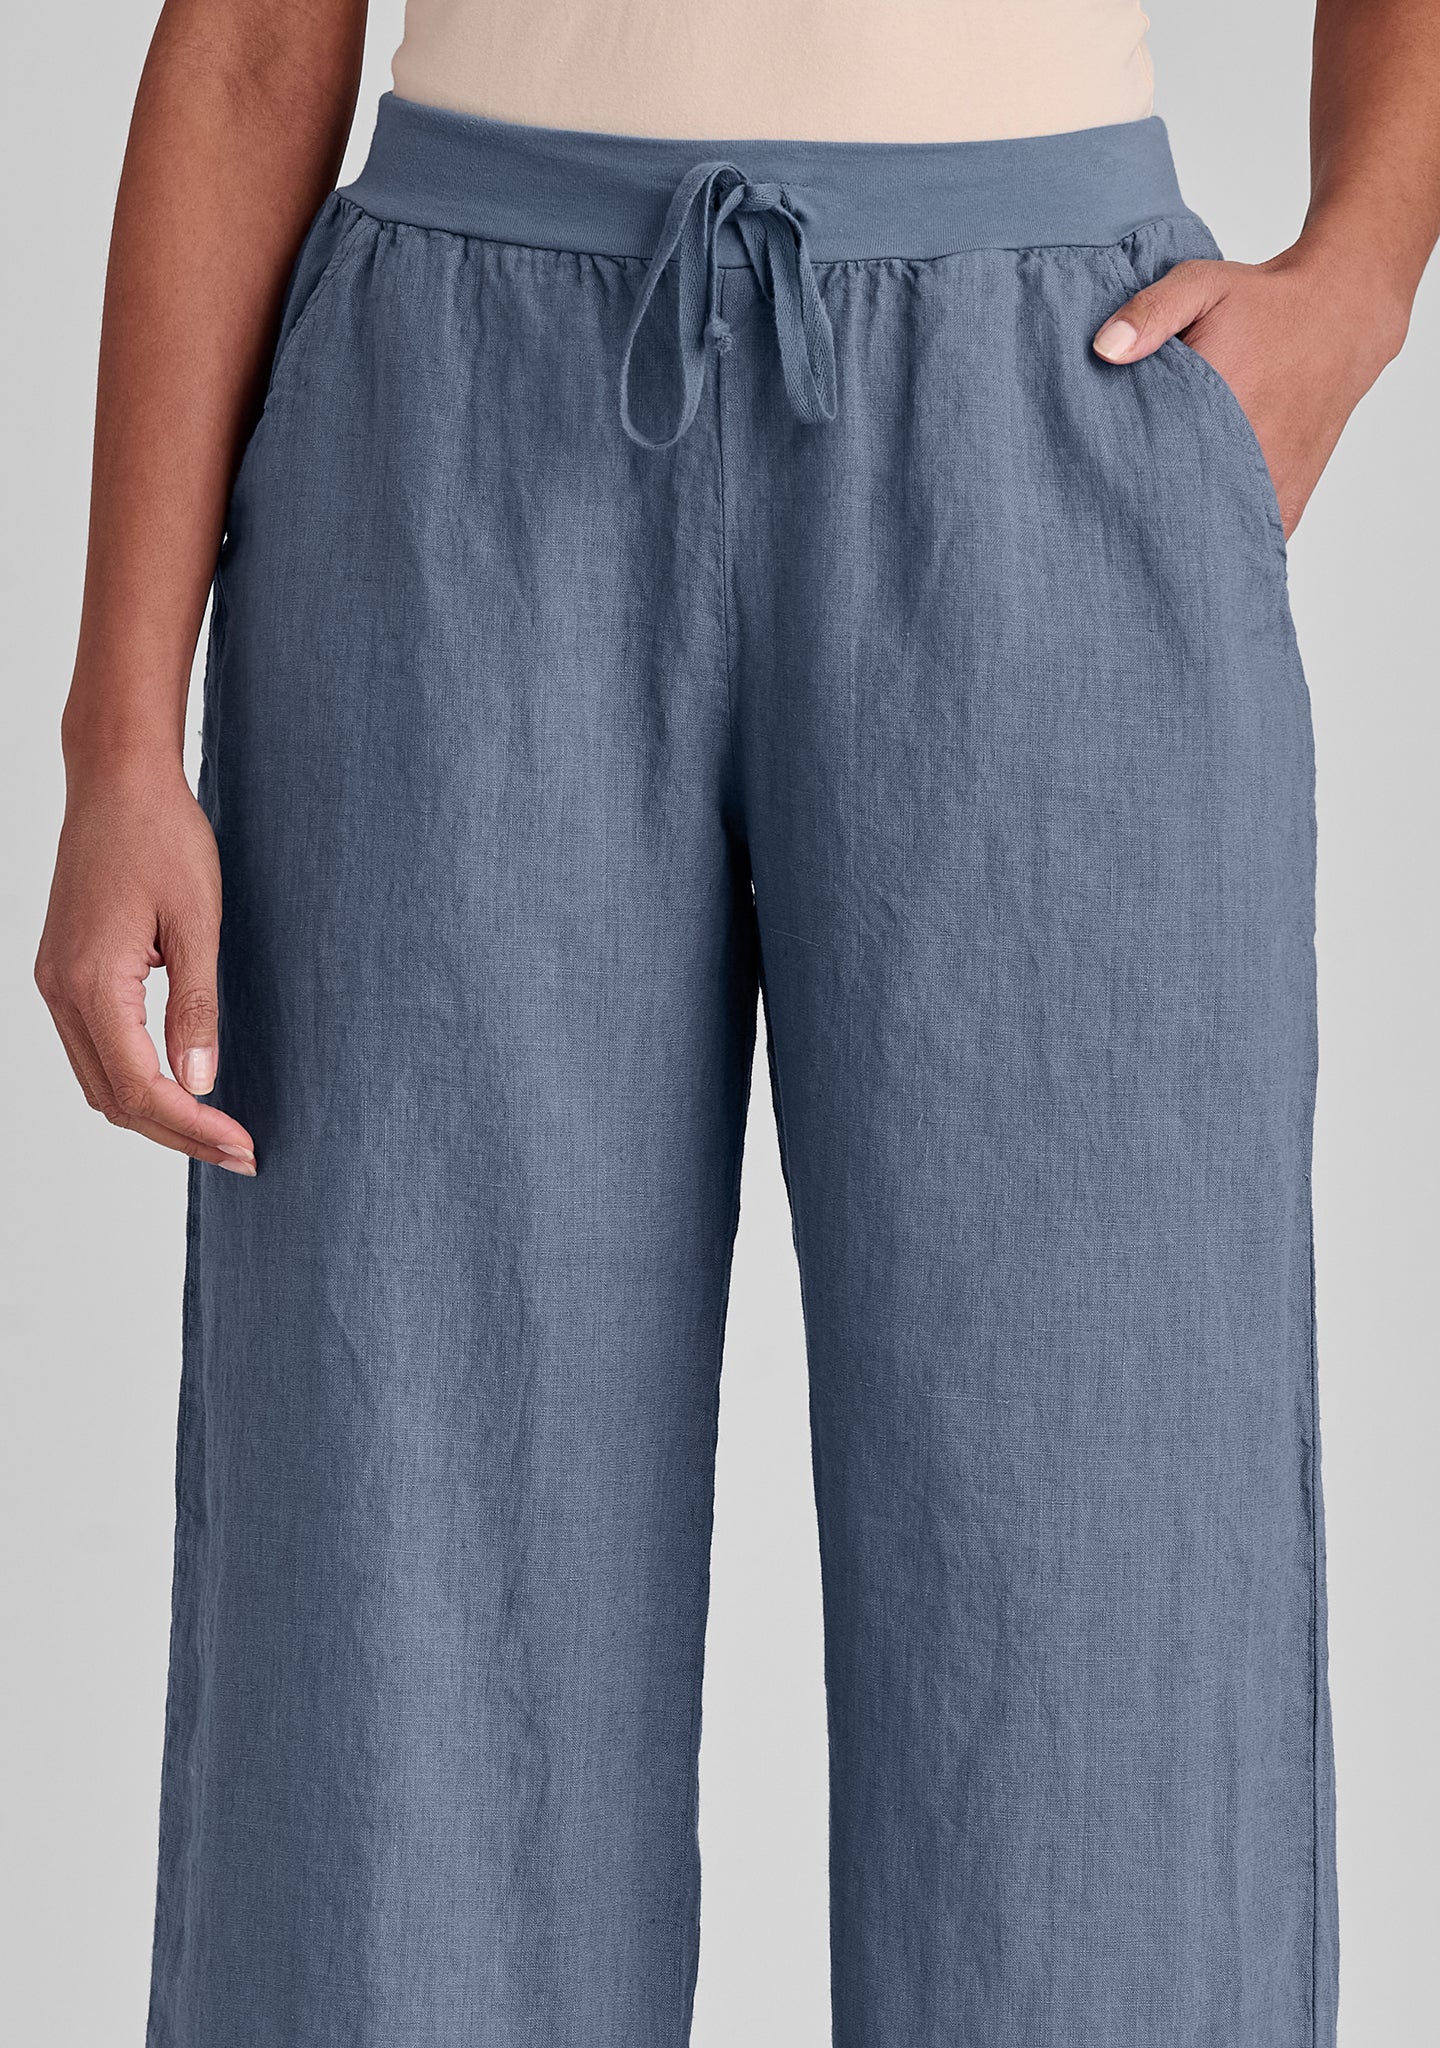 flat iron pant linen drawstring pants details